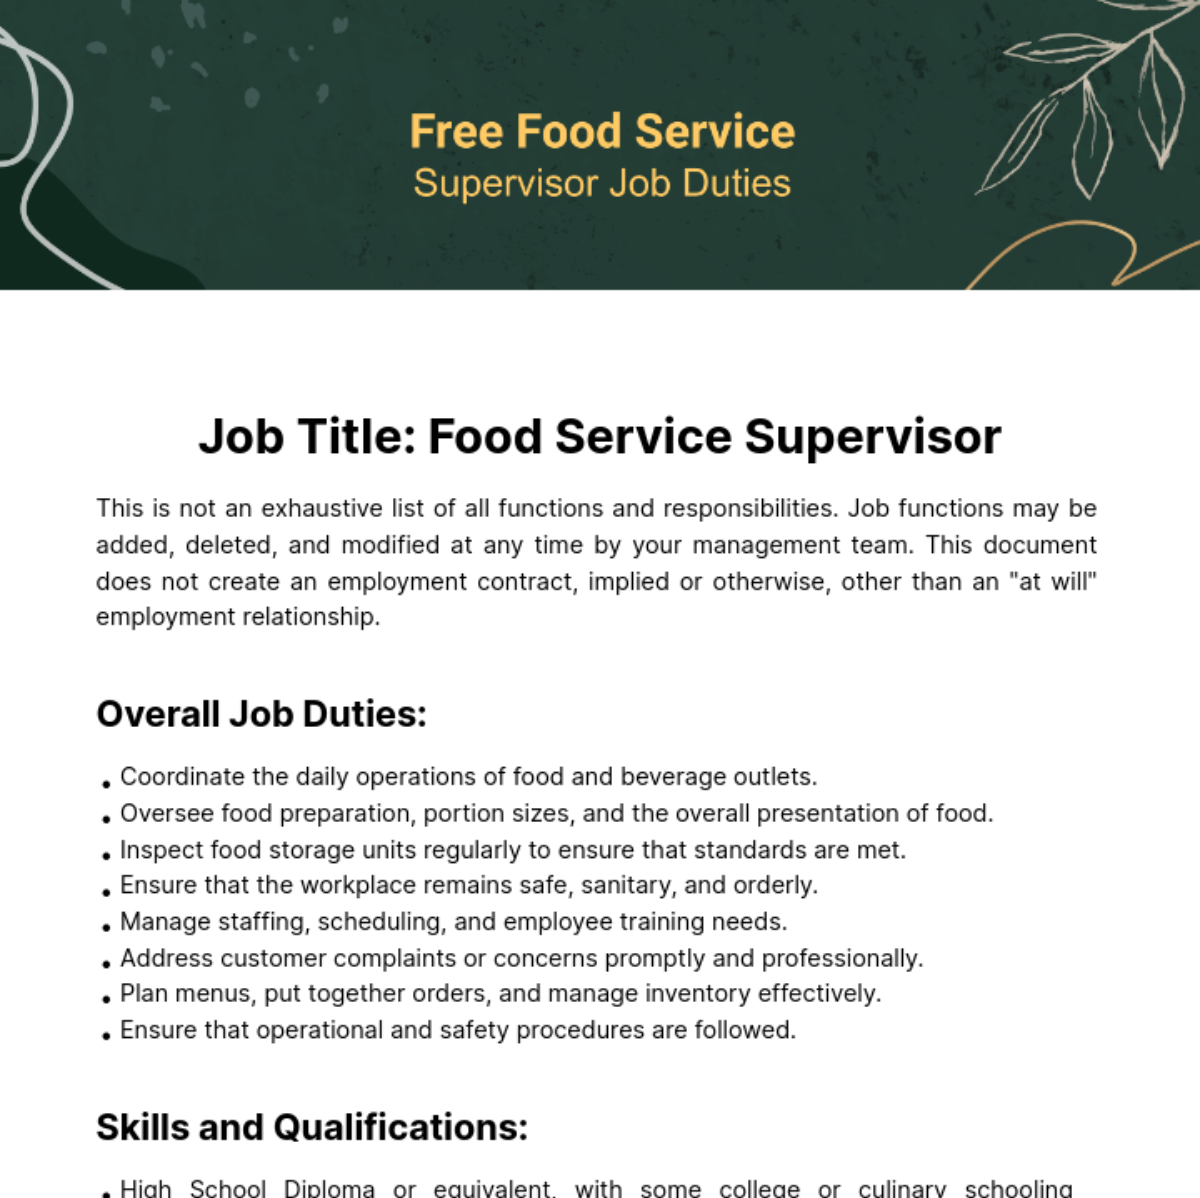 Free Food Service Supervisor Job Duties Template